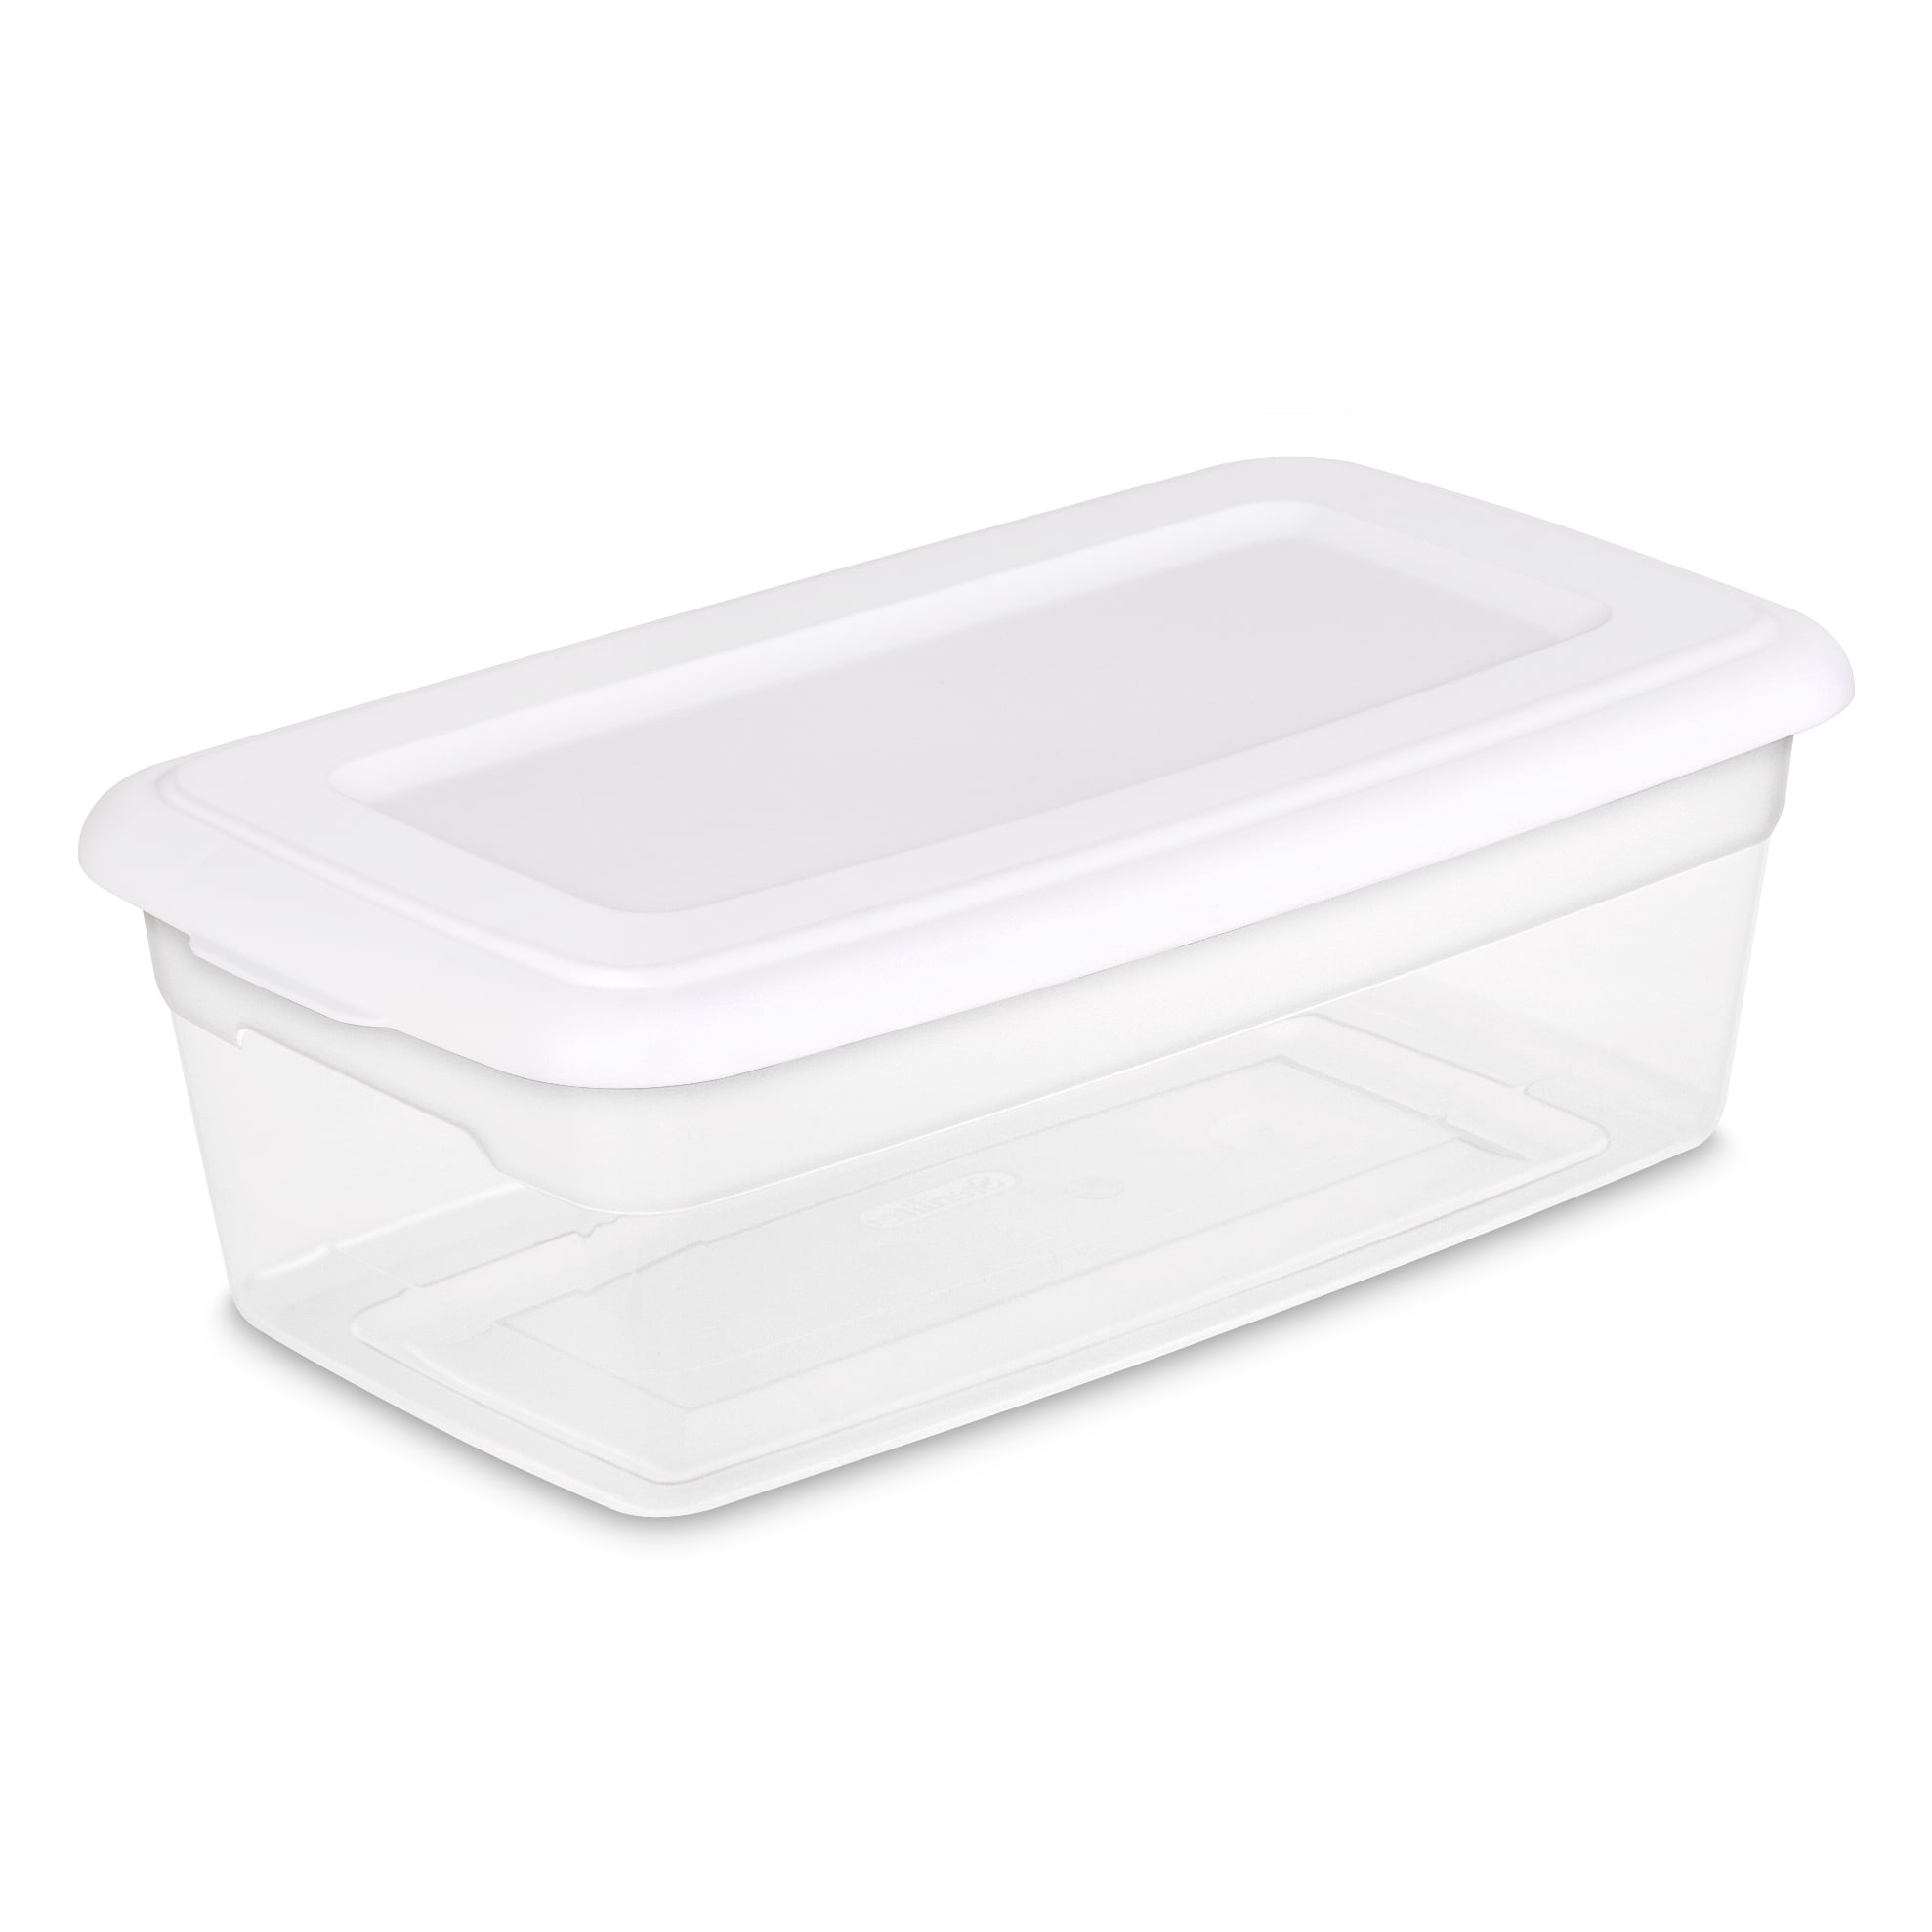 2 BOX SET Sterilite 18038612 Small Clear Flip Top Storage Box CONTAINER CLEAR 